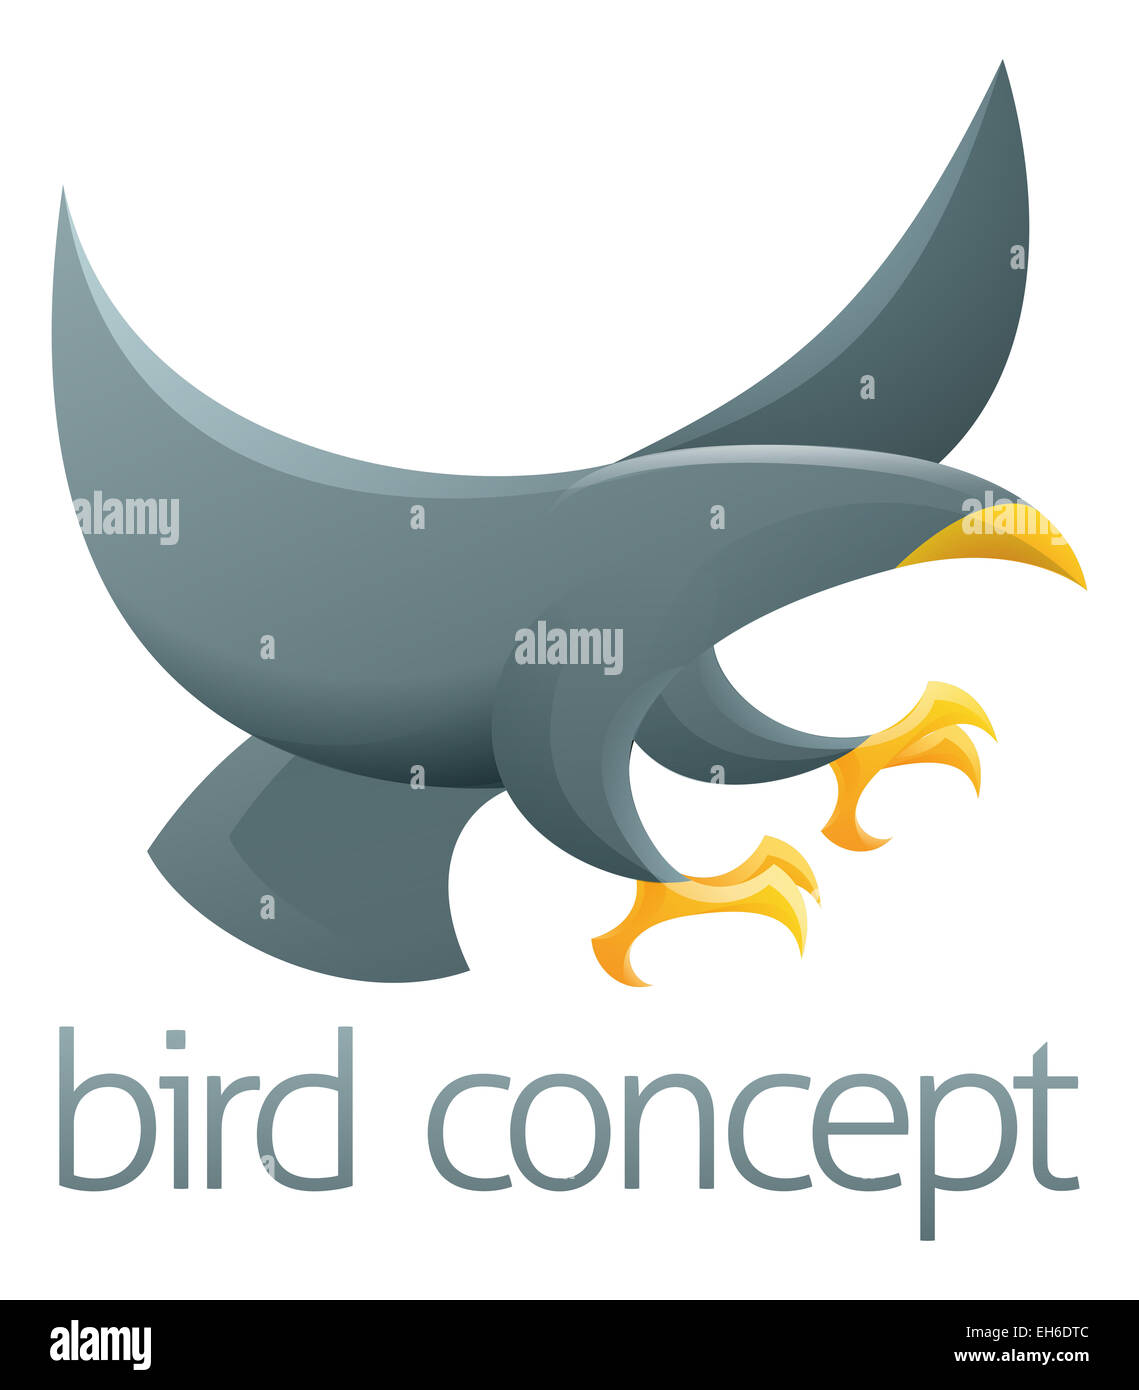 An abstract illustration of a bird concept design Stock Photo